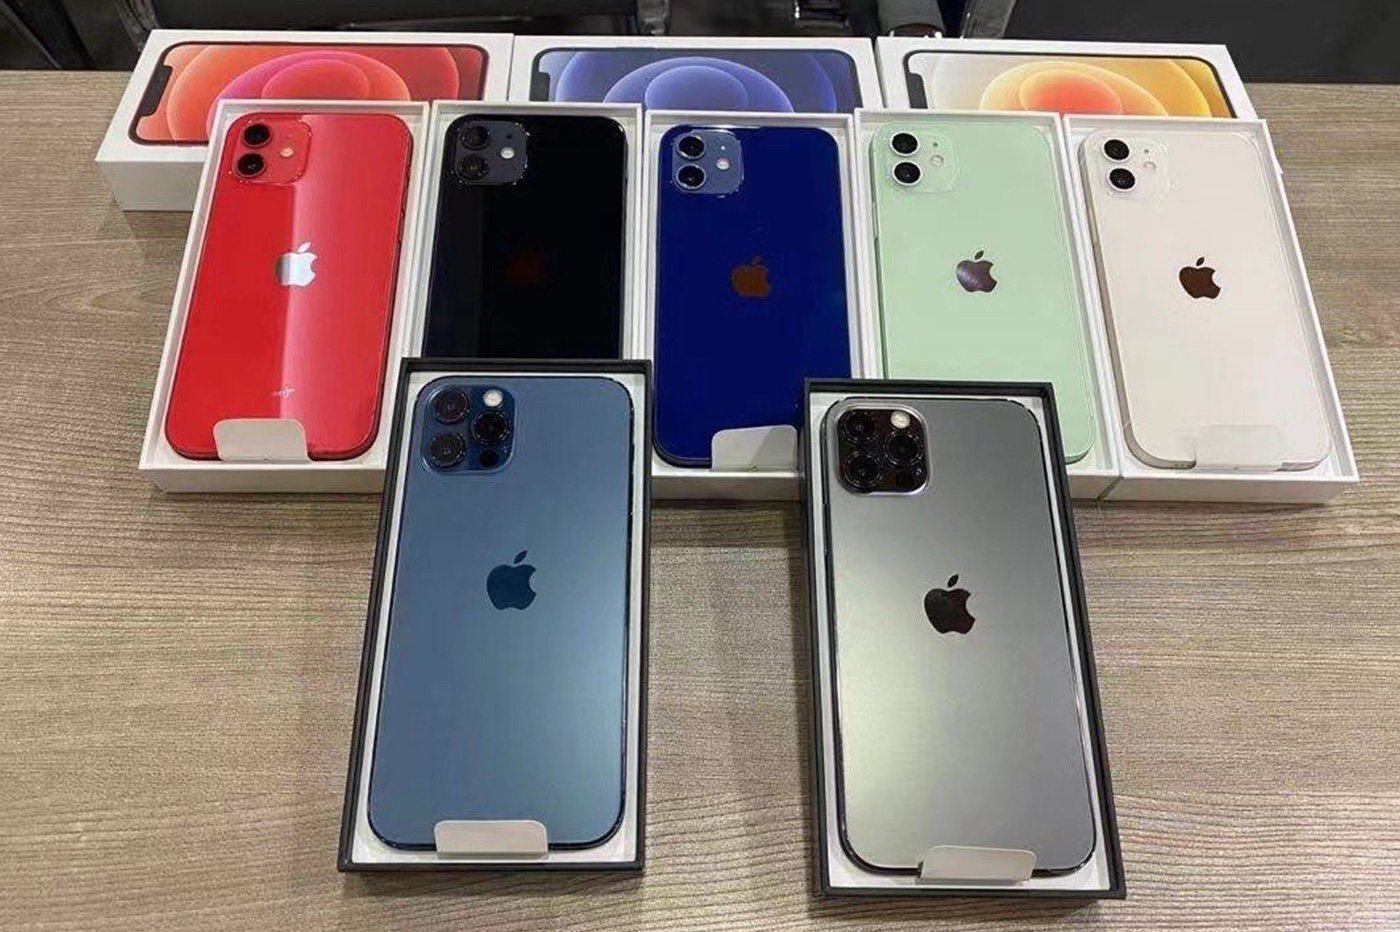 iPhone 12 couleurs leak